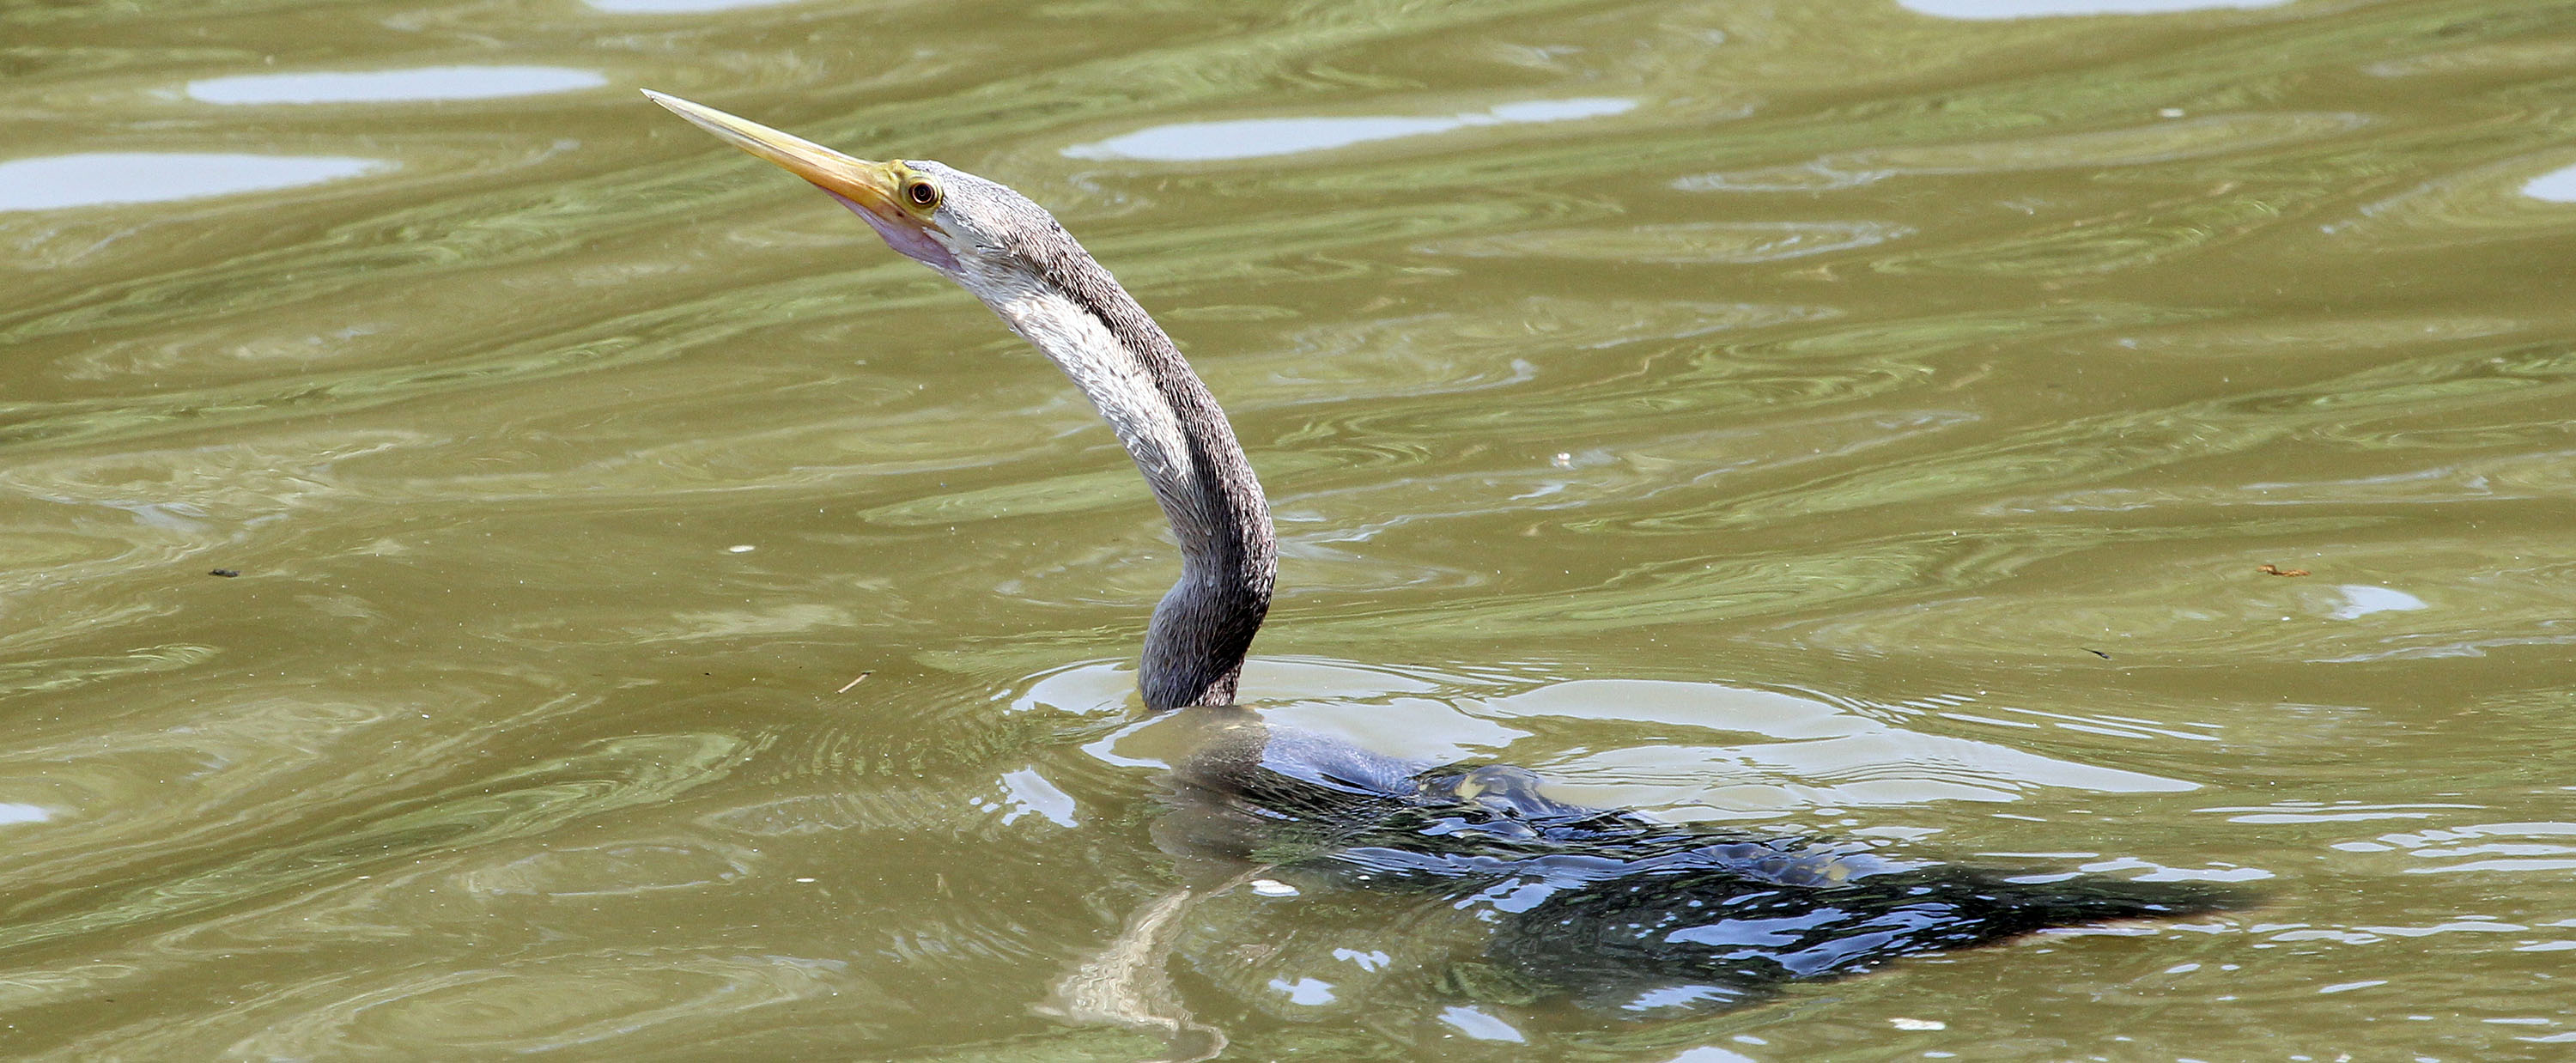 anhinga-in-water-pantanal